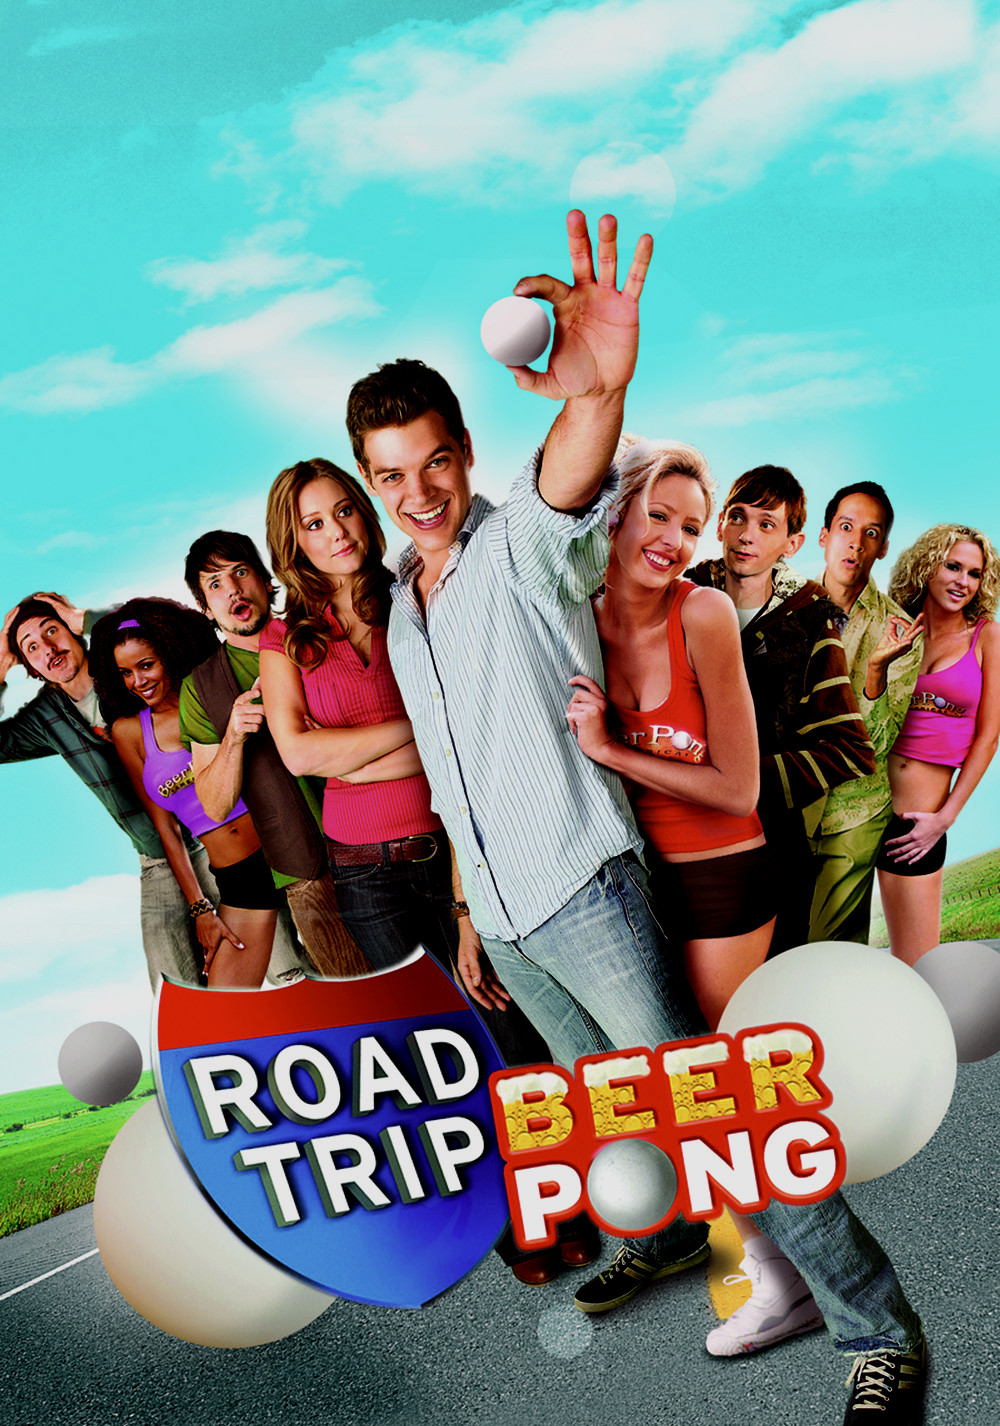 the movie road trip beer pong